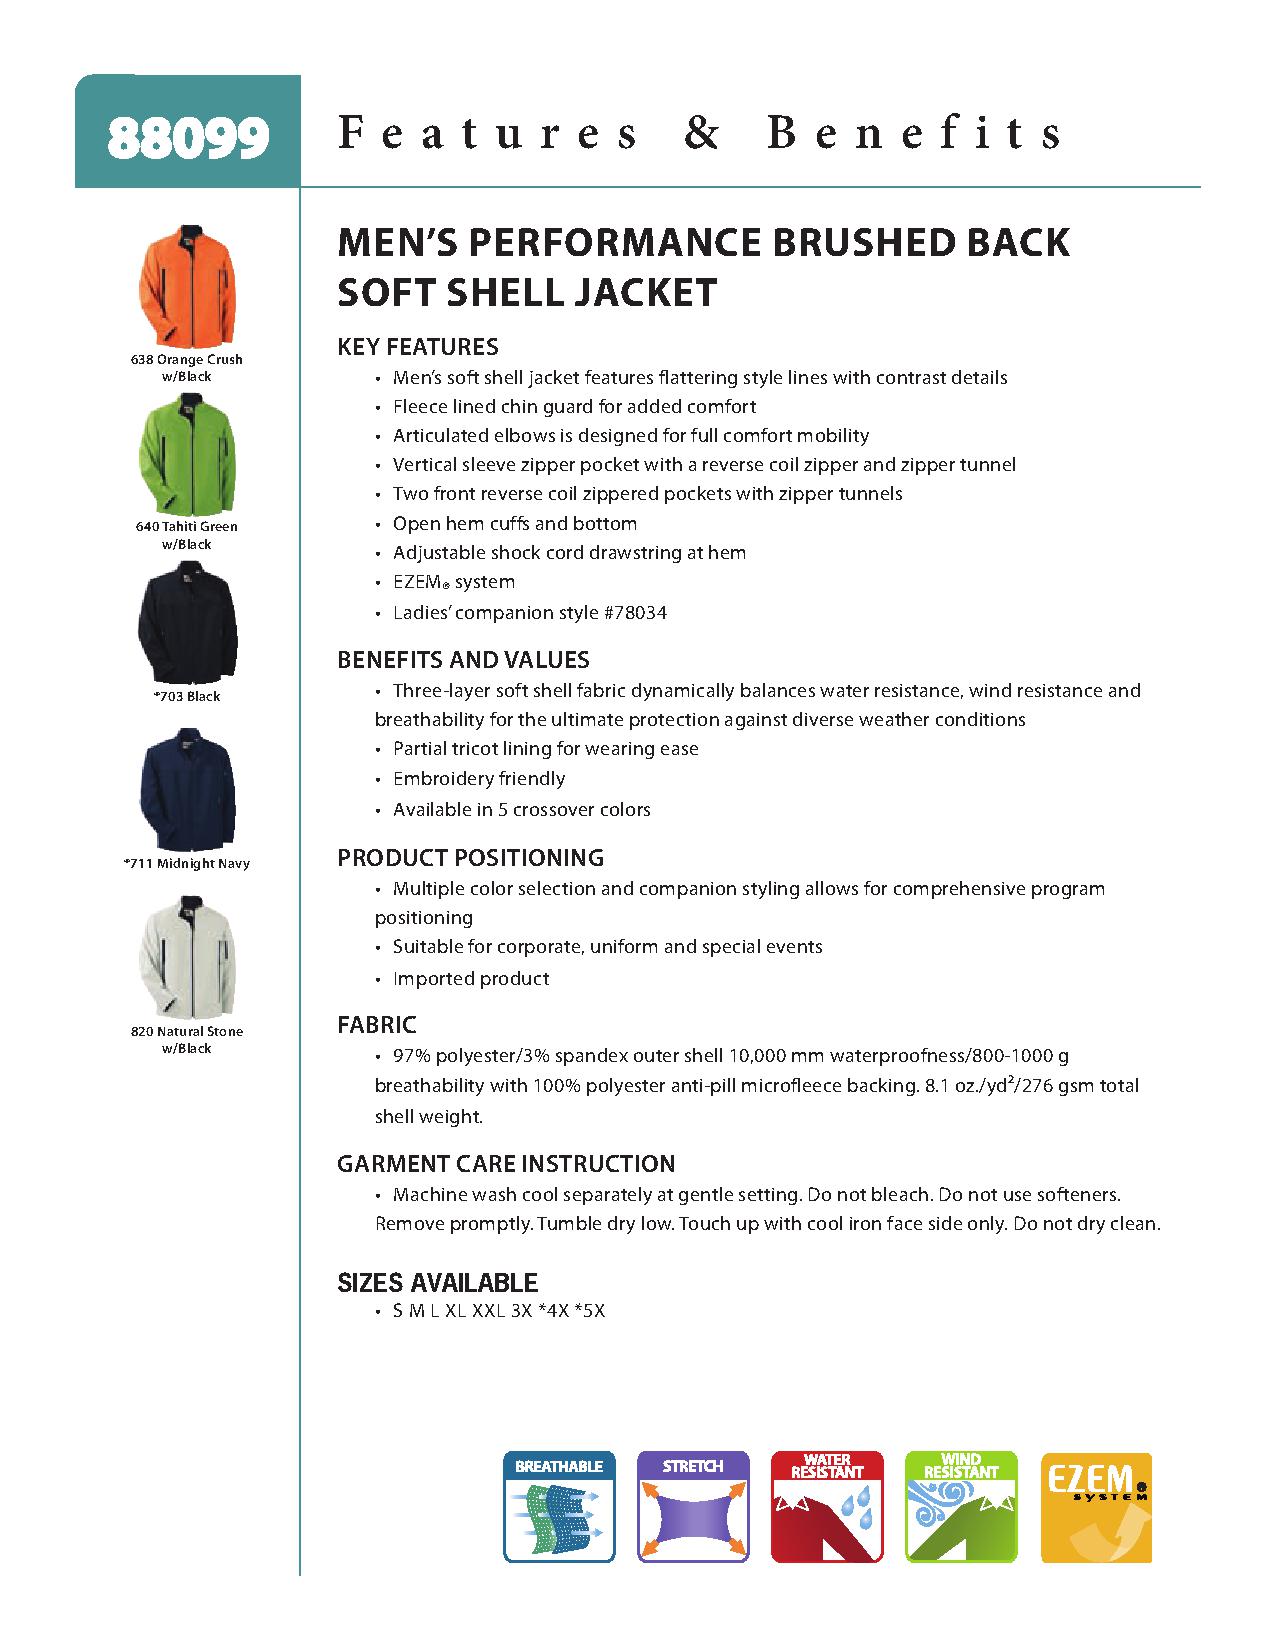 North End 88099 - Men's Three-Layer Fleece Bonded Performance Soft Shell Jacket